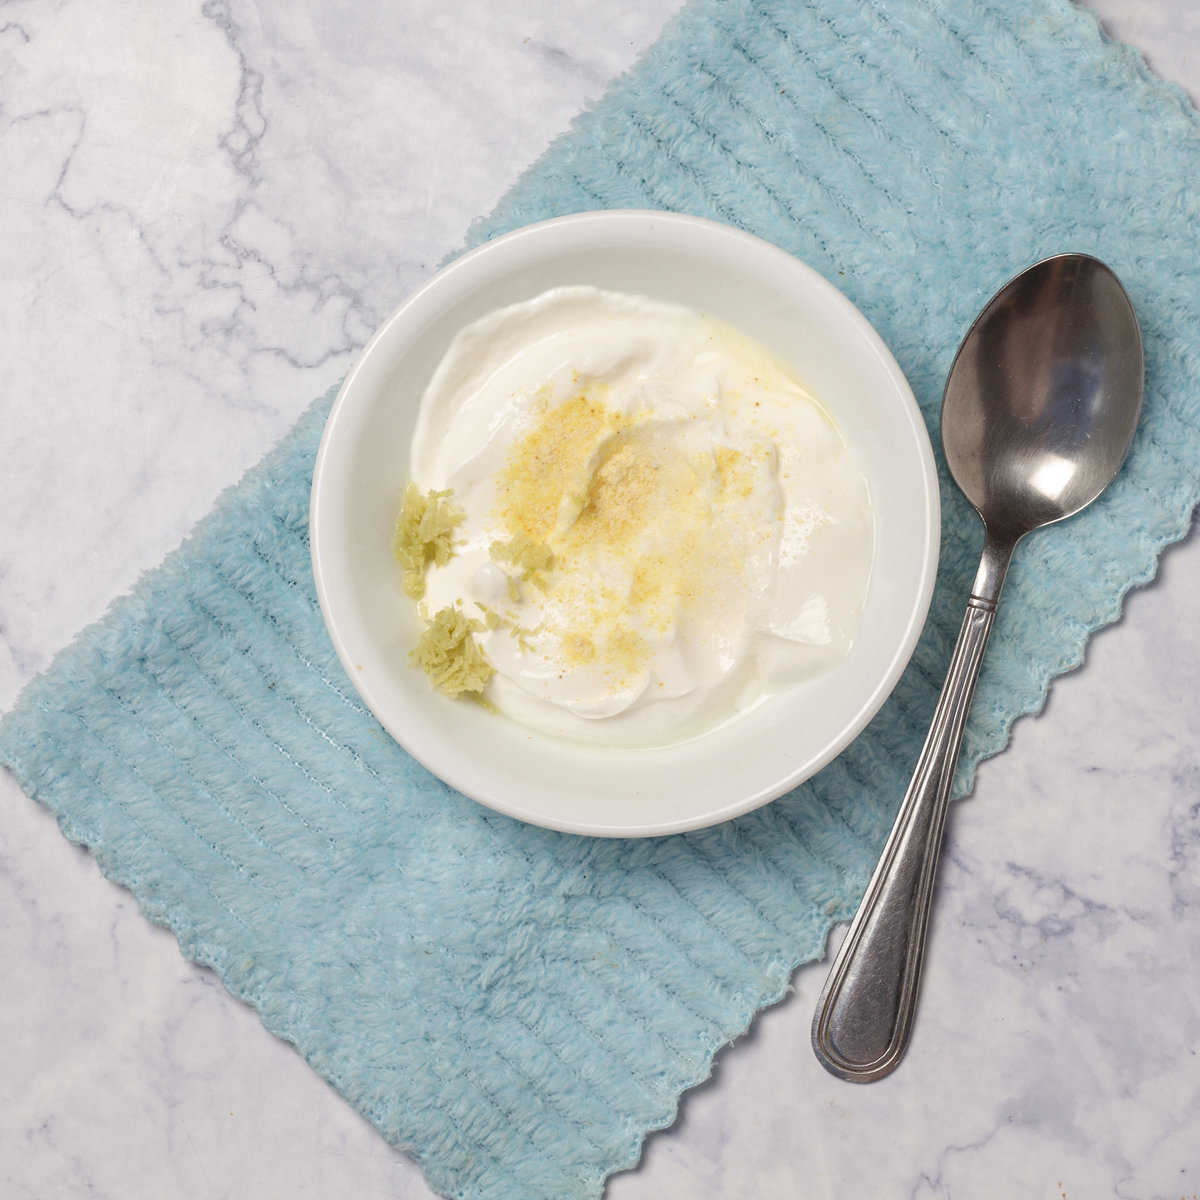 Prepare the yogurt cream by mixing yogurt, garlic, lemon zest, and salt in a small bow, 